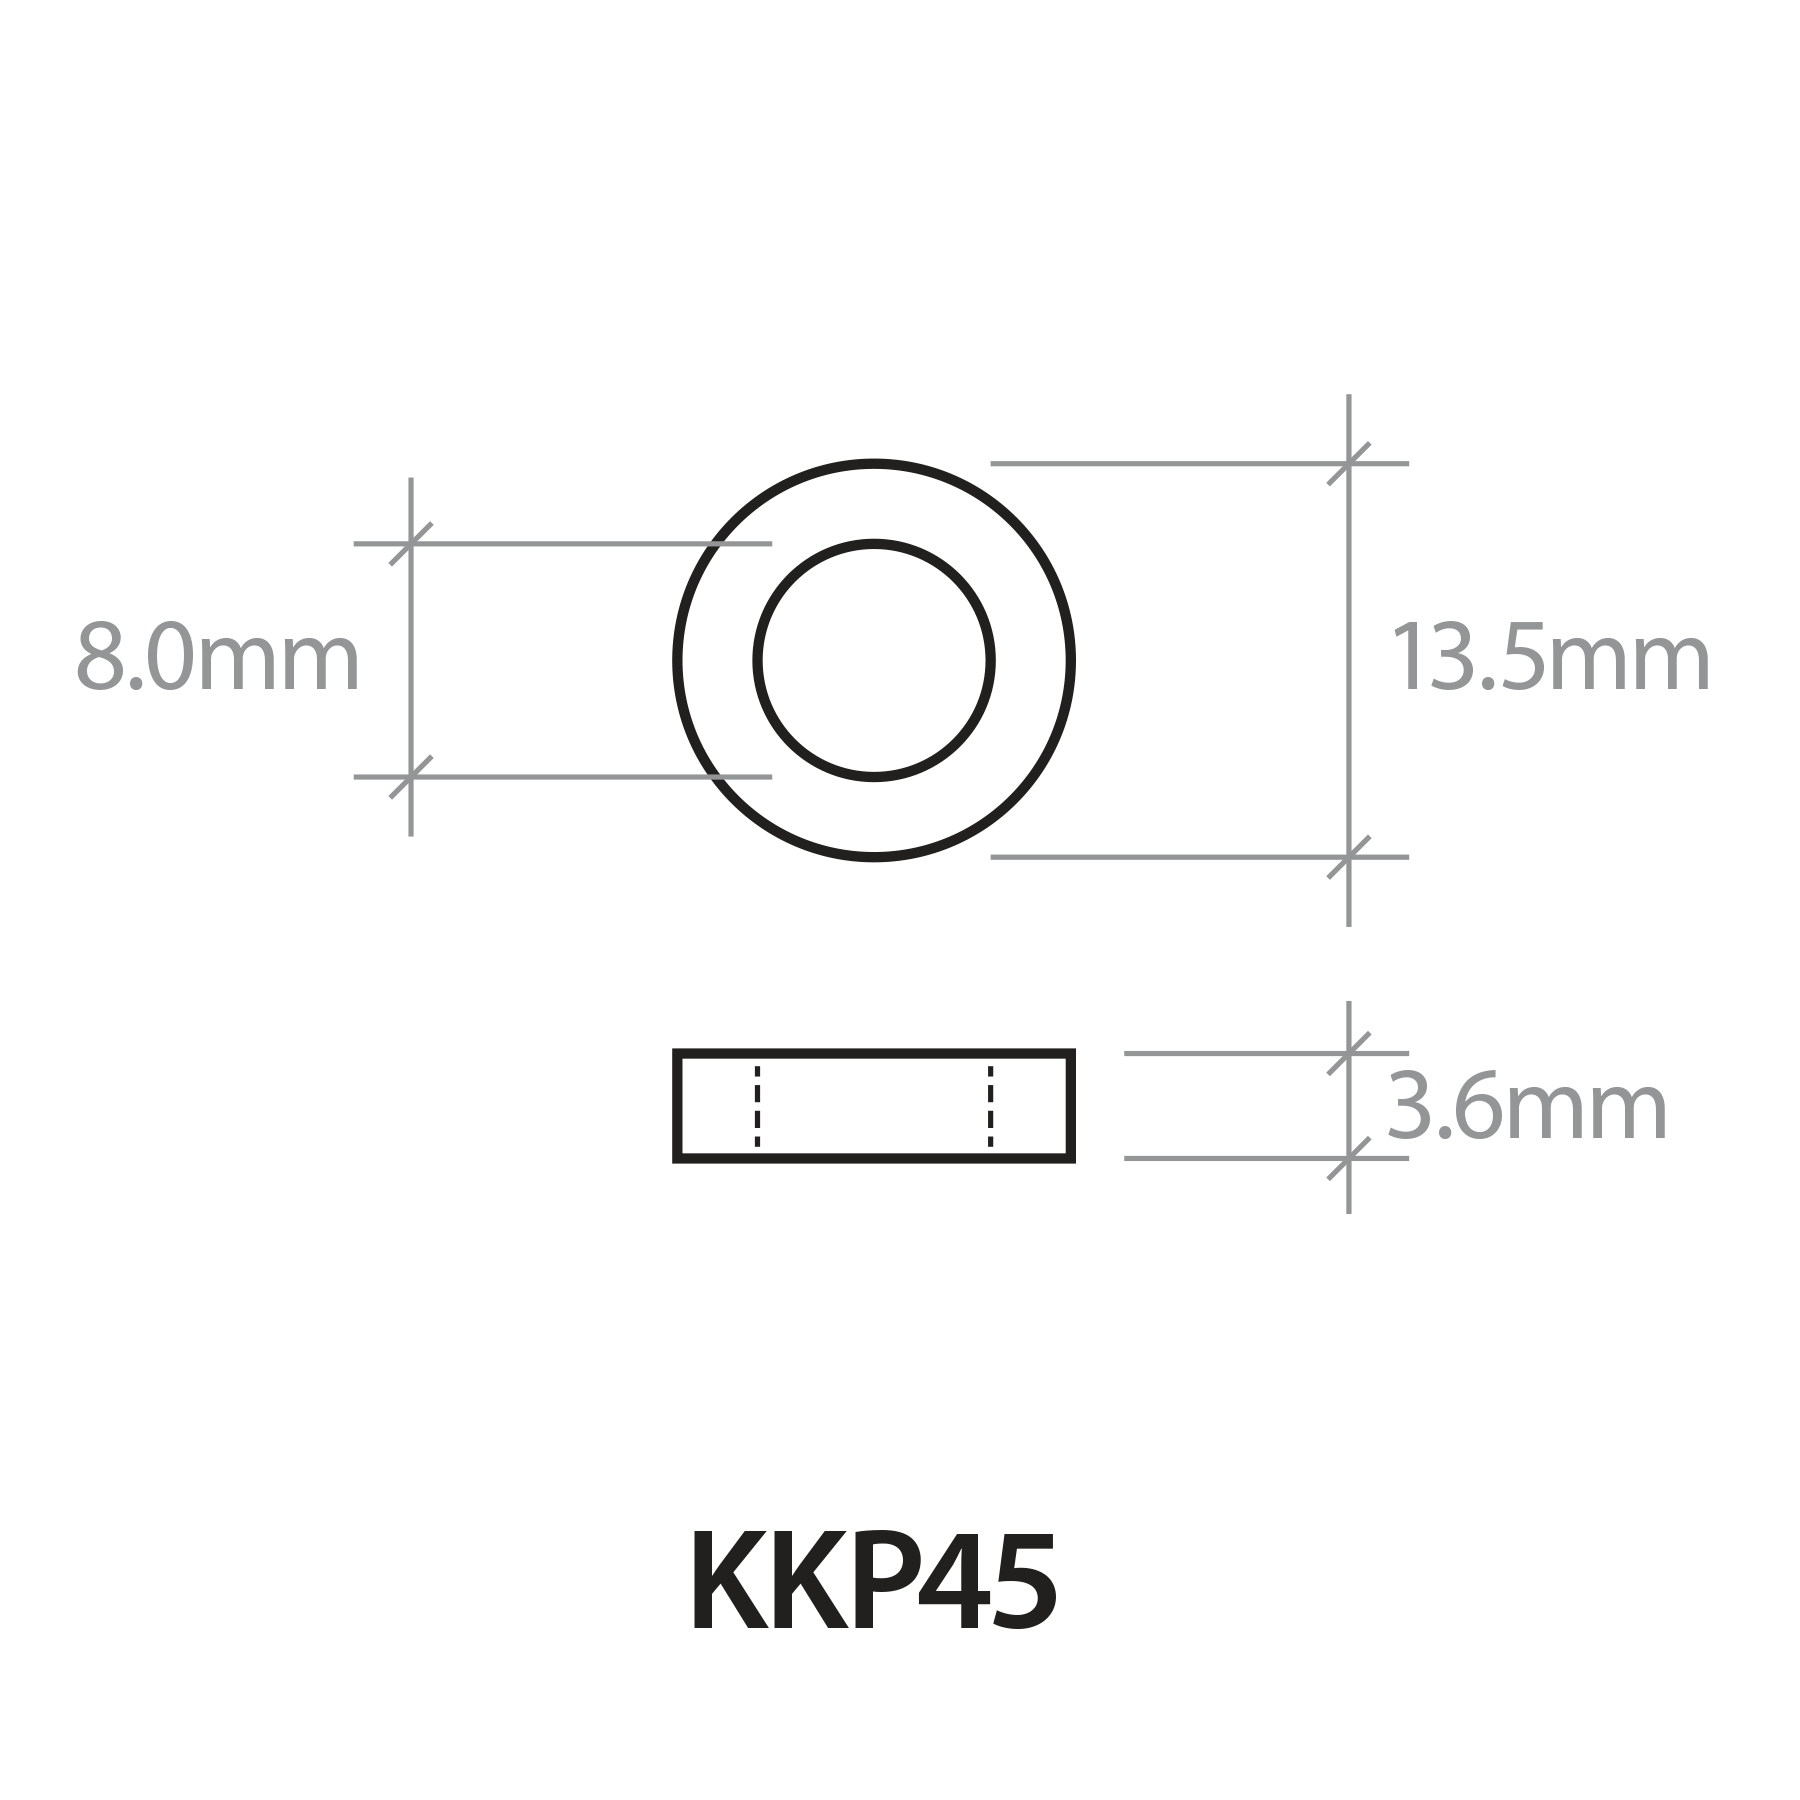 KKP45 Spacer Dimensions